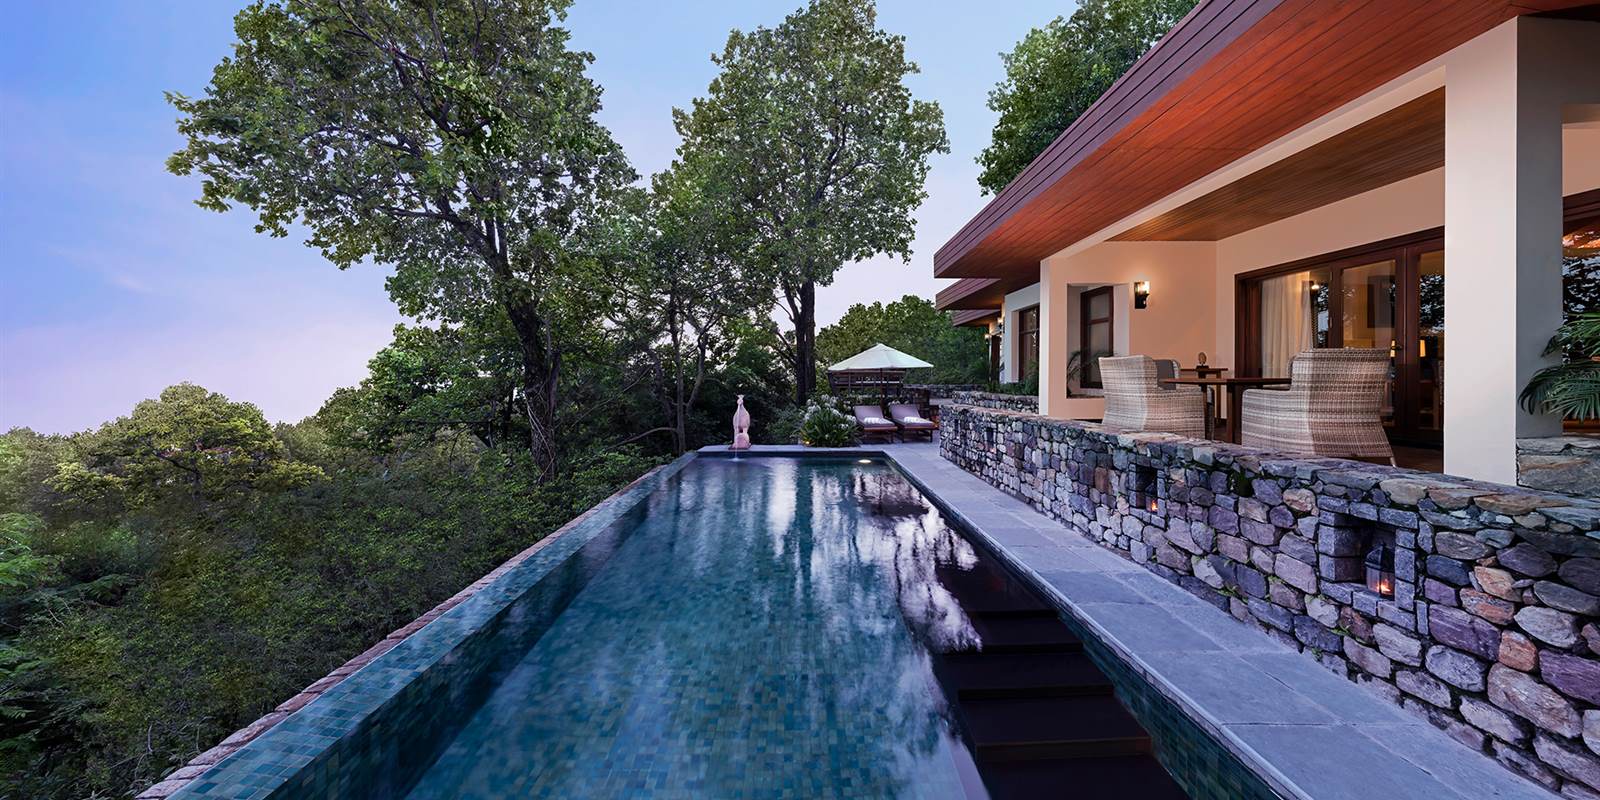 Health Spa Retreats - Himalayan luxury villas with private pools